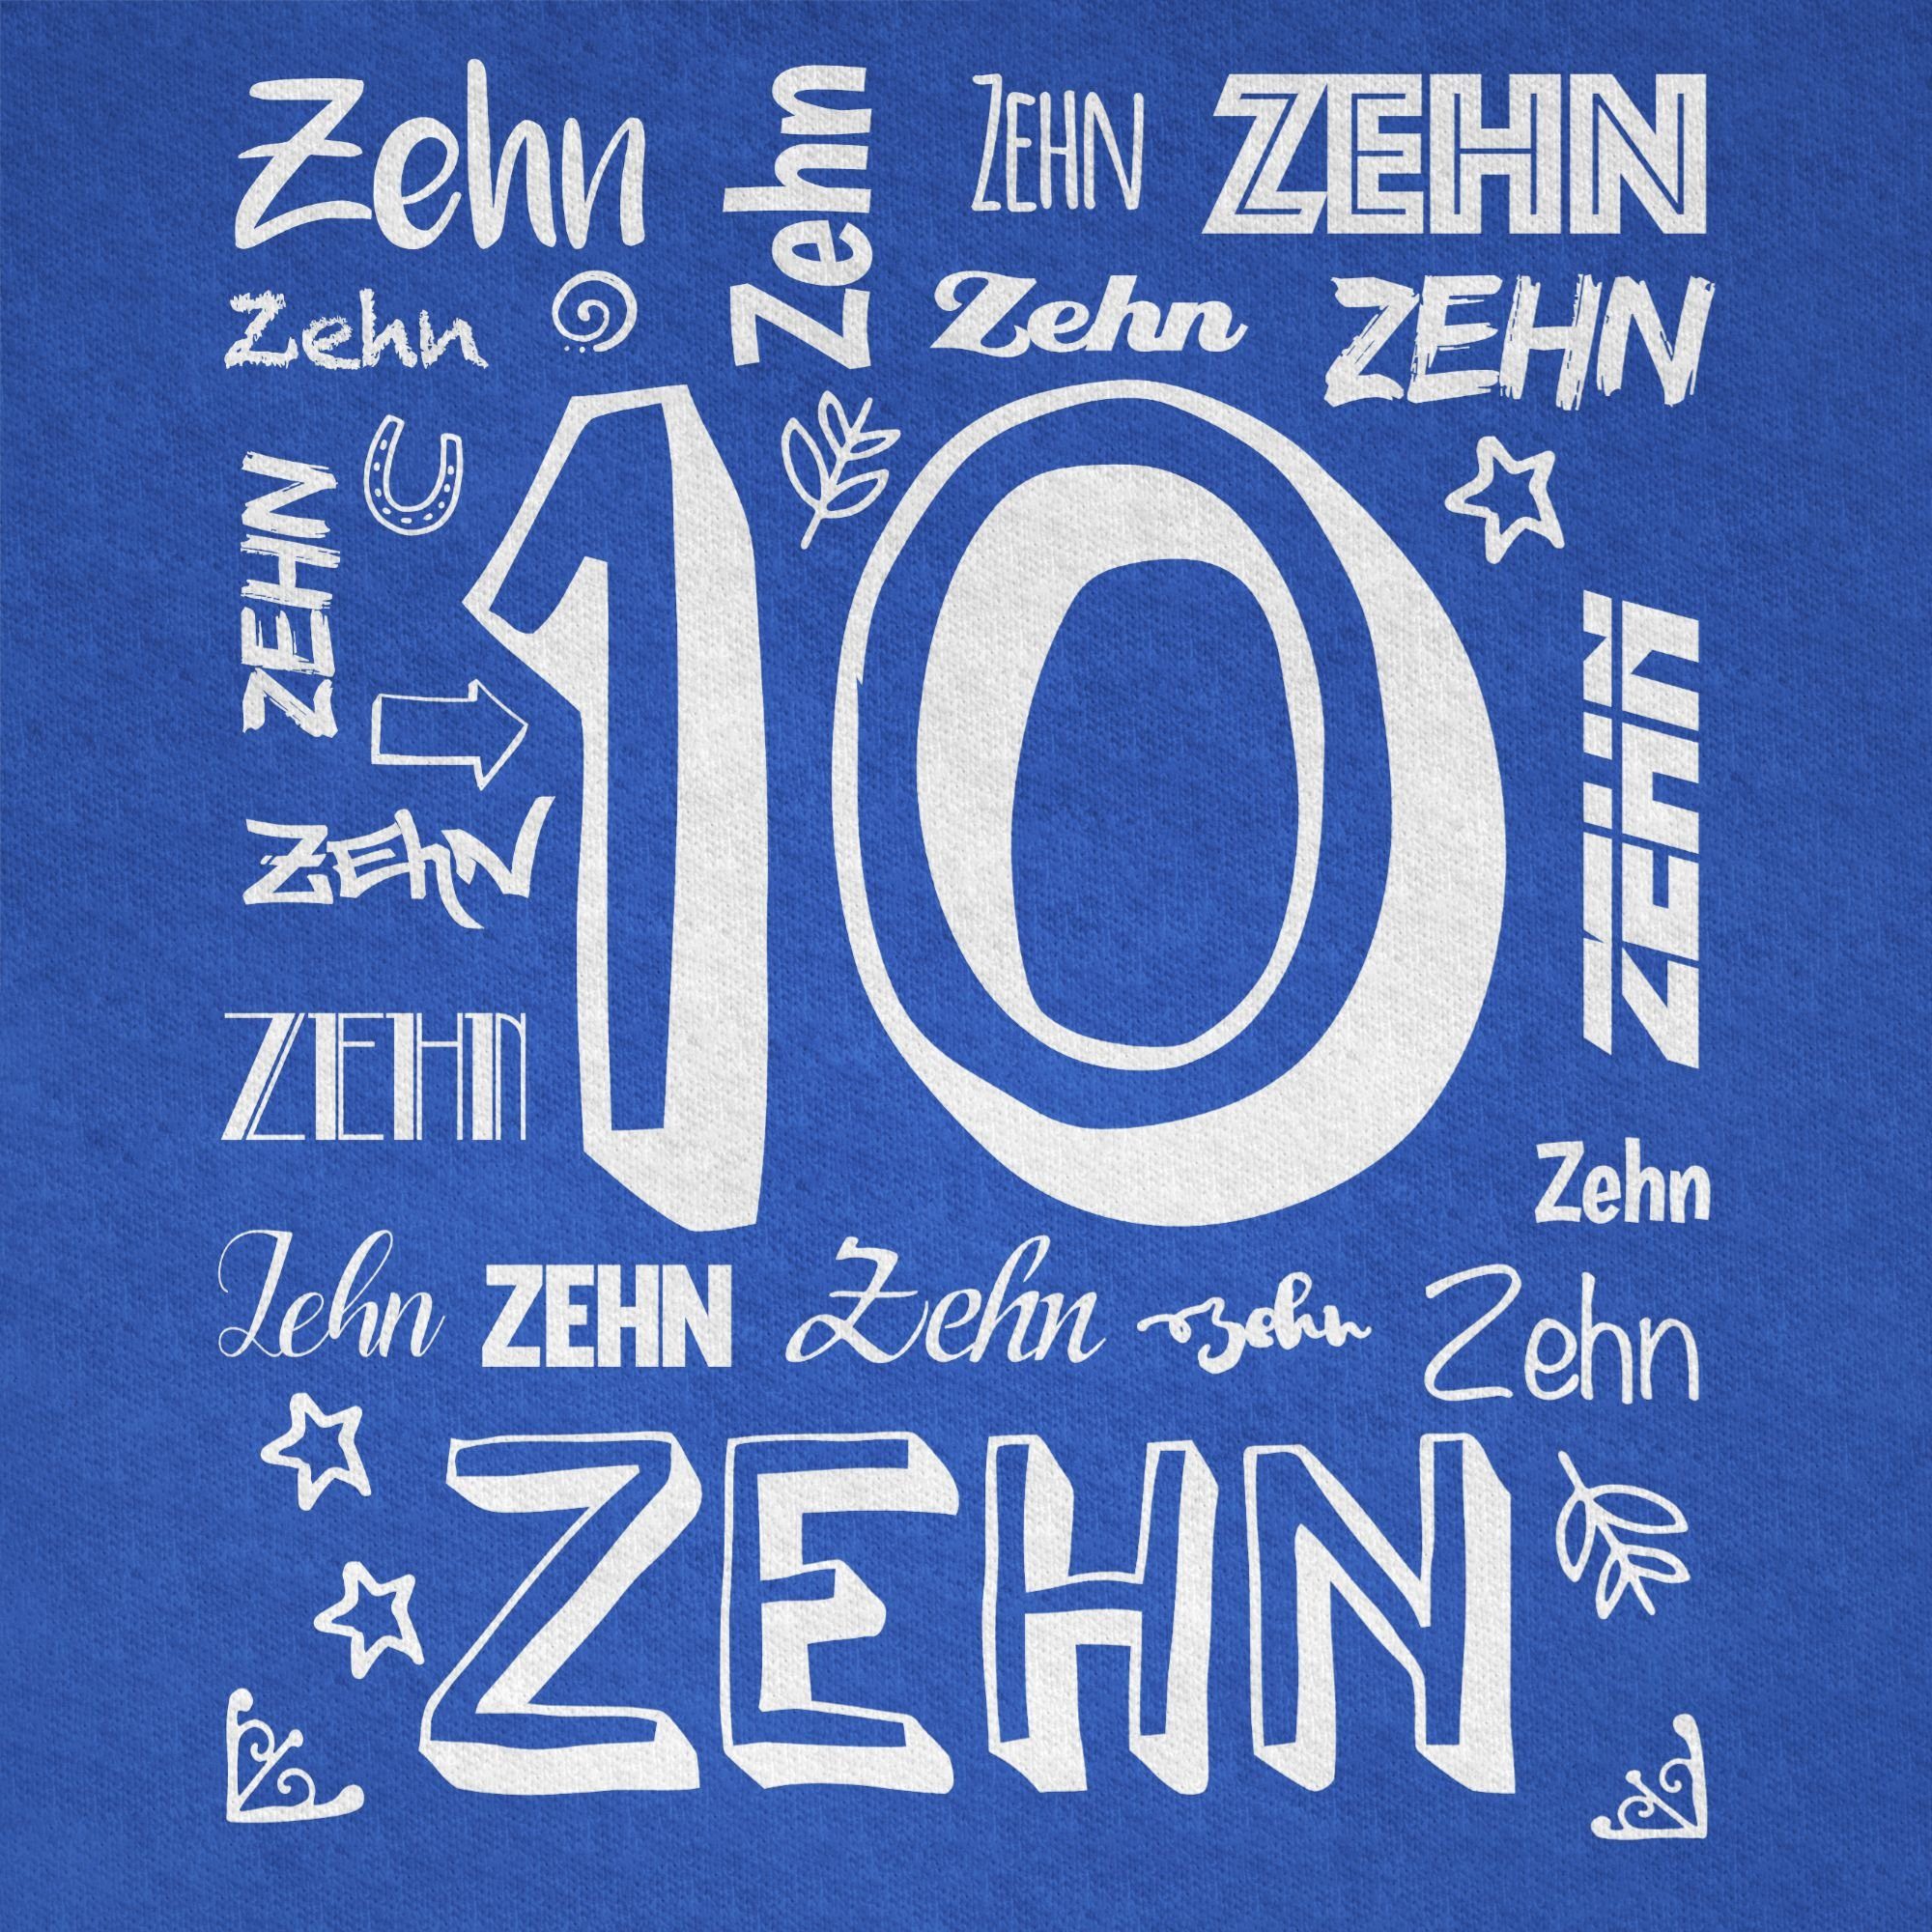 T-Shirt 10. Shirtracer Zahlen Royalblau Zehnter 3 Geburtstag